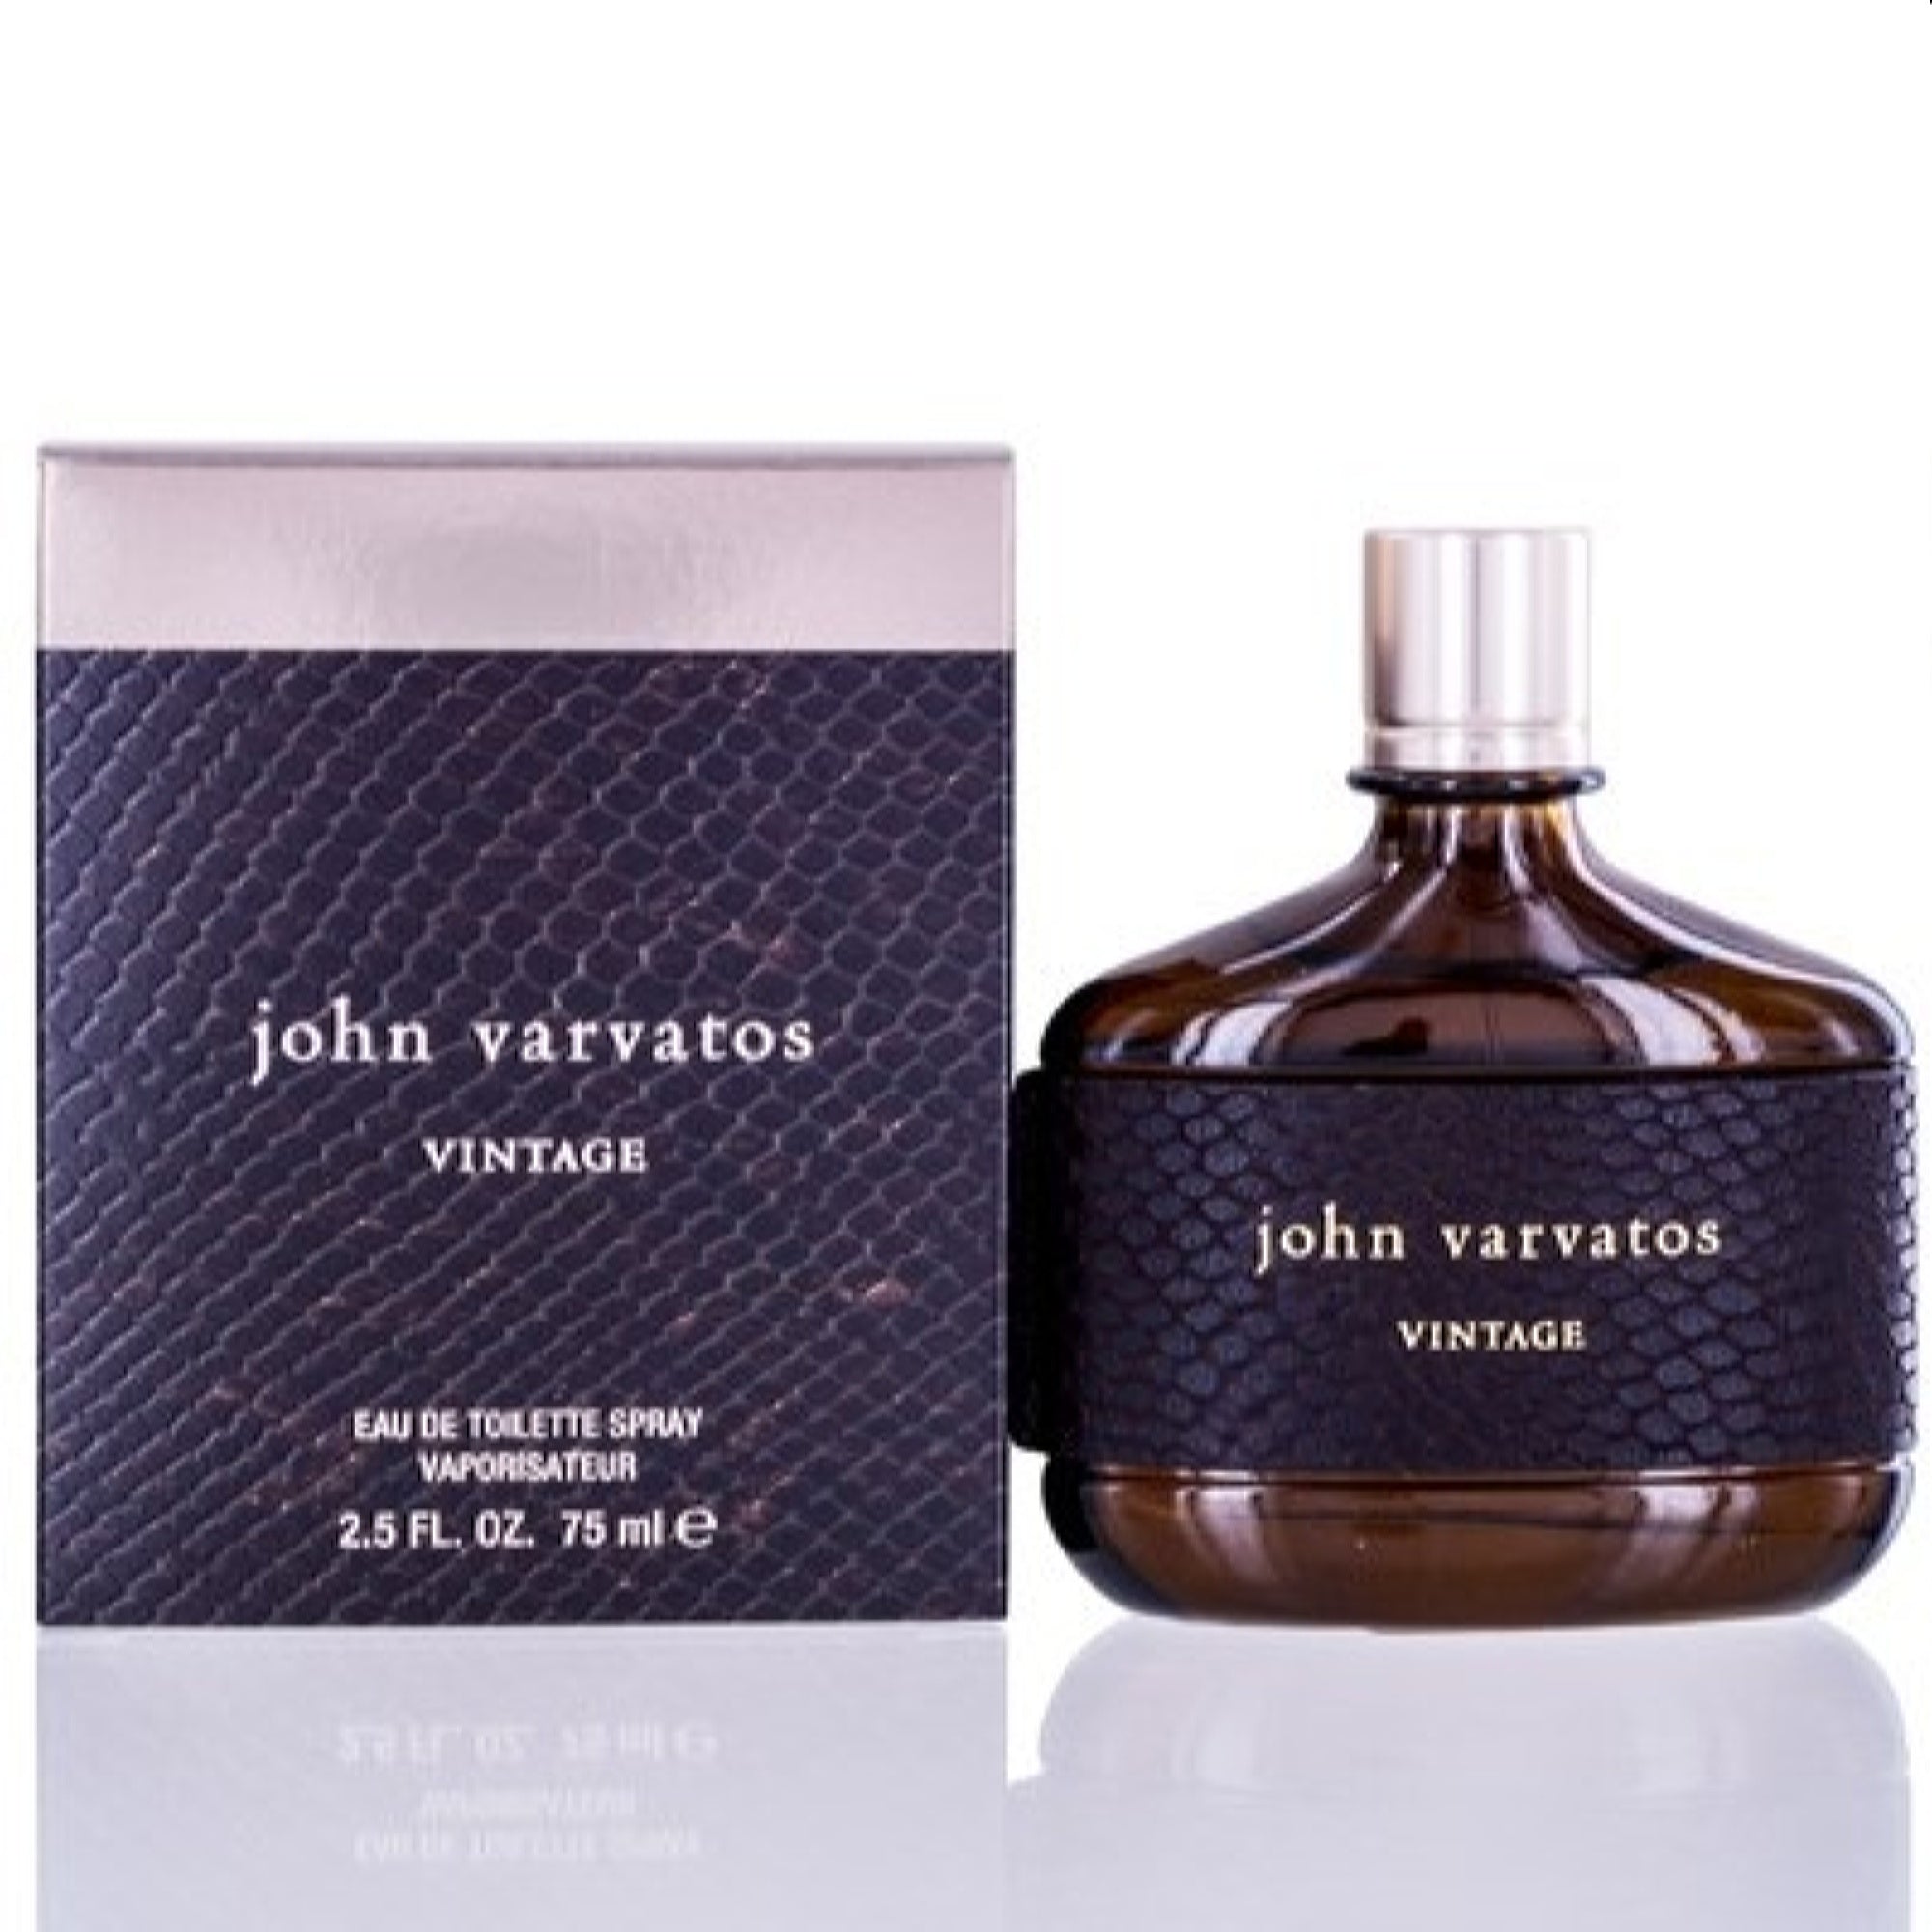 John Varvatos Men's John Varvatos Vintage John Varvatos Edt Spray 2.5 Oz  873824001085